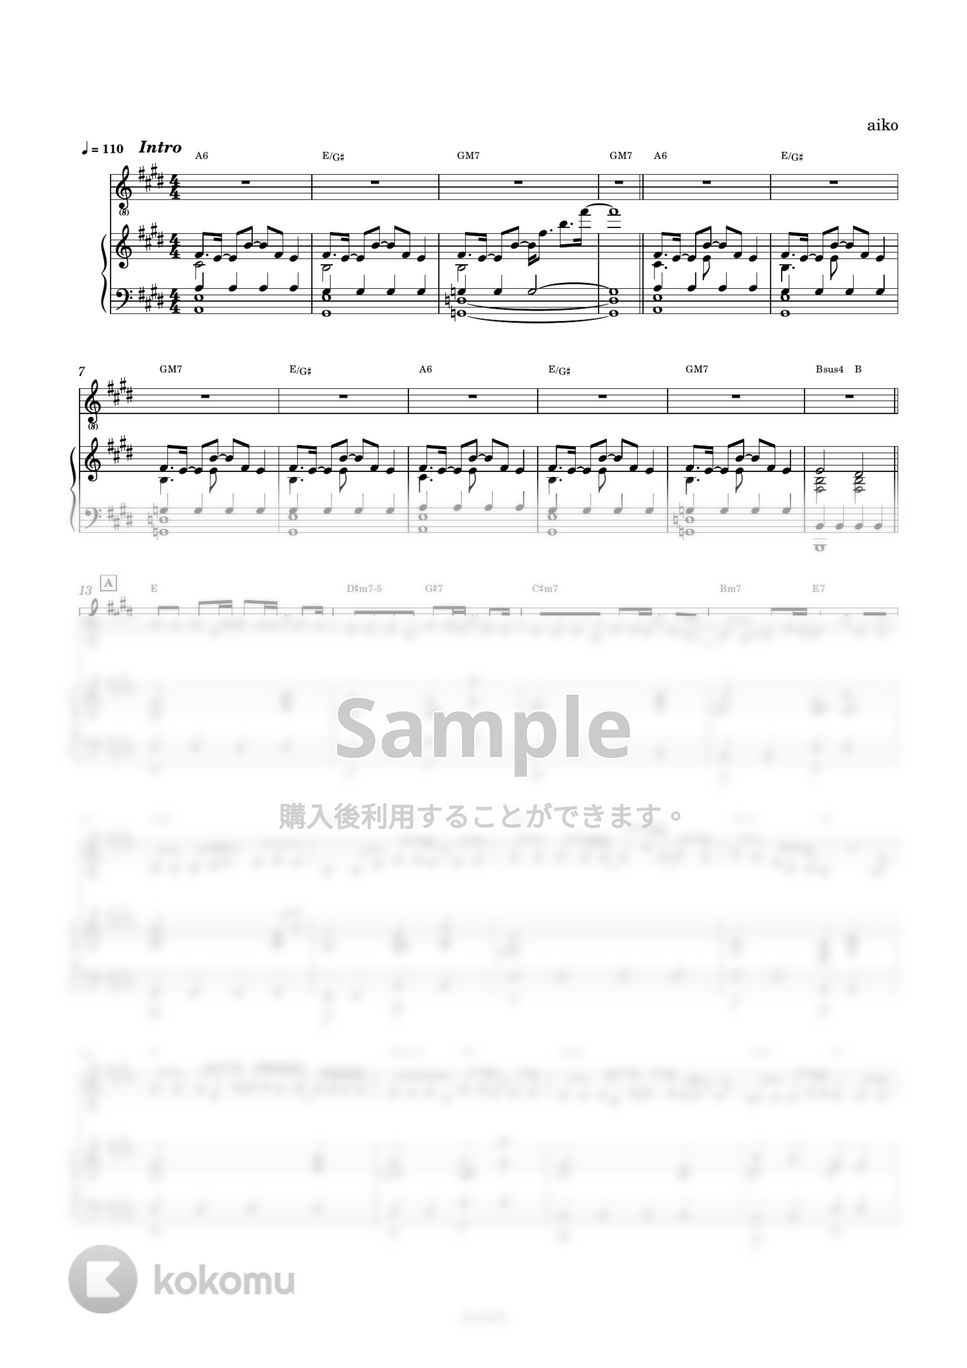 aiko - ひまわりになったら (aikoひまわりになったら楽譜/ひまわりになったら弾き語り) by AsukA818